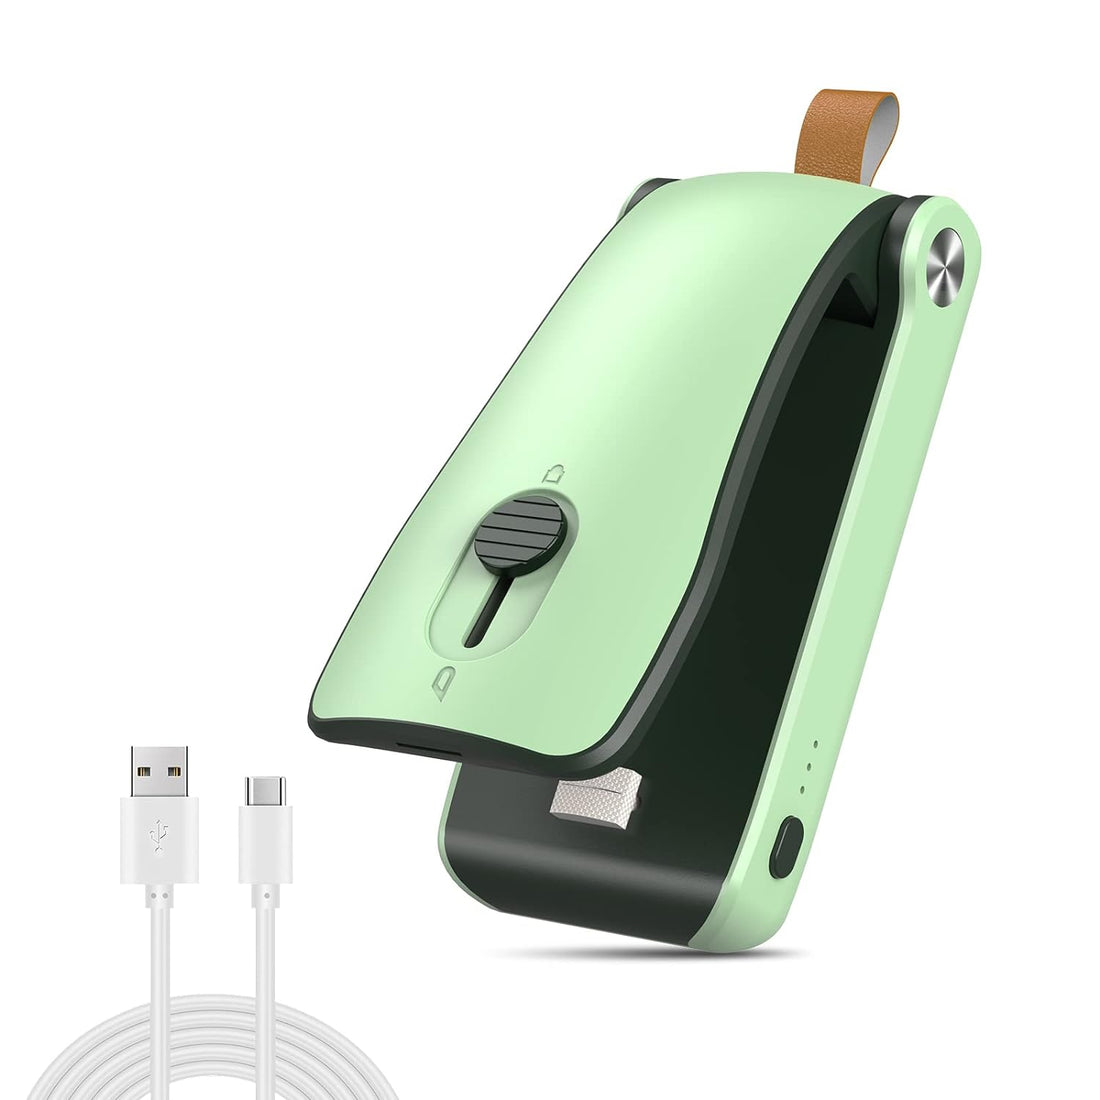 KeeKit Mini Bag Sealer, Rechargeable 2 in 1 Heat Sealer and Cutter, Portable Handheld Bag Heat Vacuum Sealers for Plastic Bags, Food Storage, Snack Fresh Bag - Green